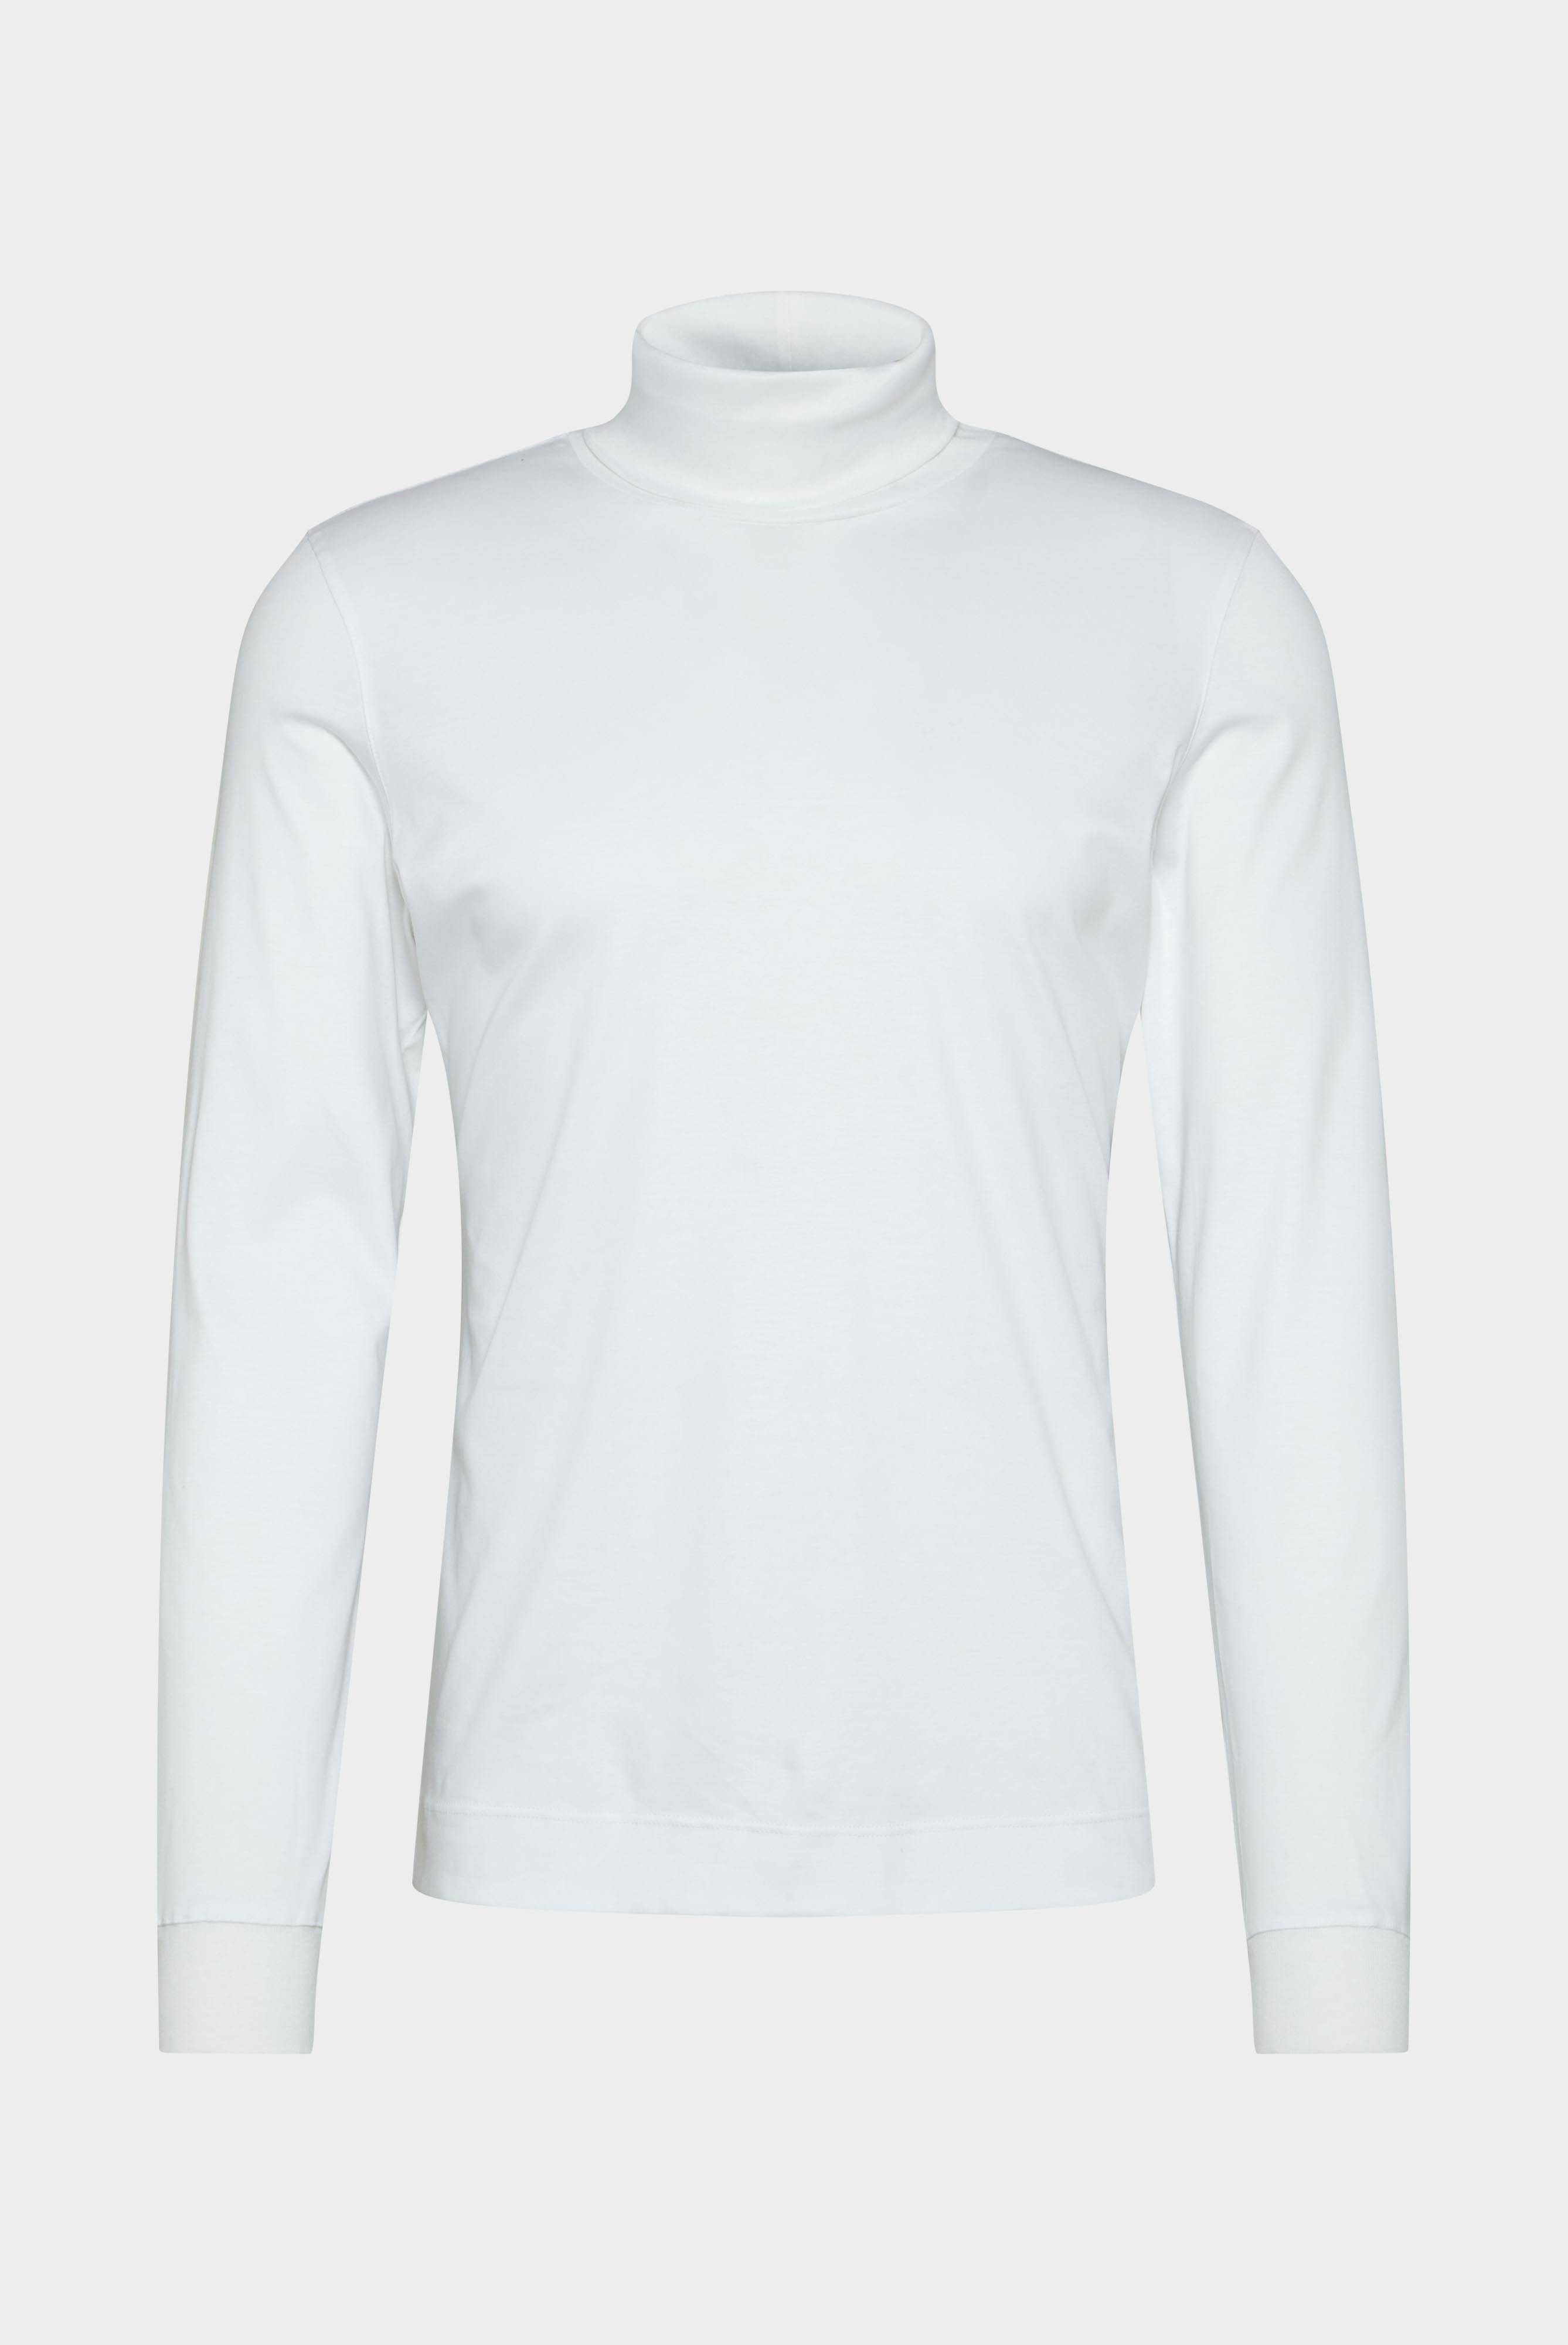 T-Shirts+Swiss Cotton Jersey Turtleneck Shirt+20.1719.UX.180031.000.XL